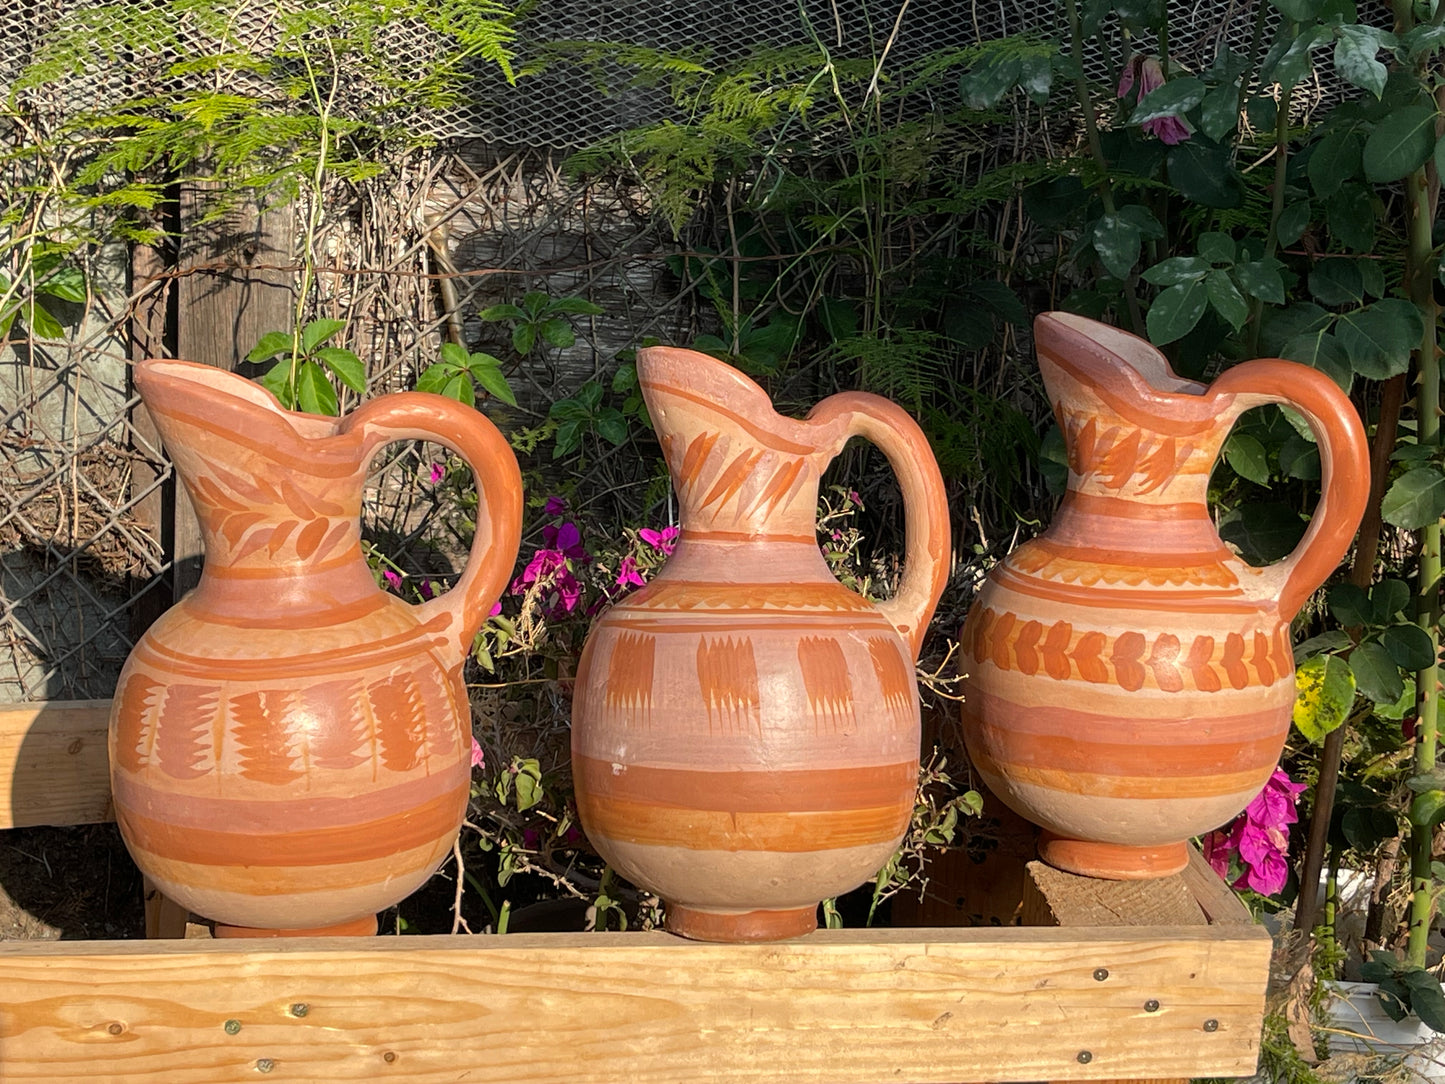 Mexico Handmade rustic terracotta water jar/ jarra de barro natural/natural terracotta hand shaped/mexico vintage water jar/pitcher